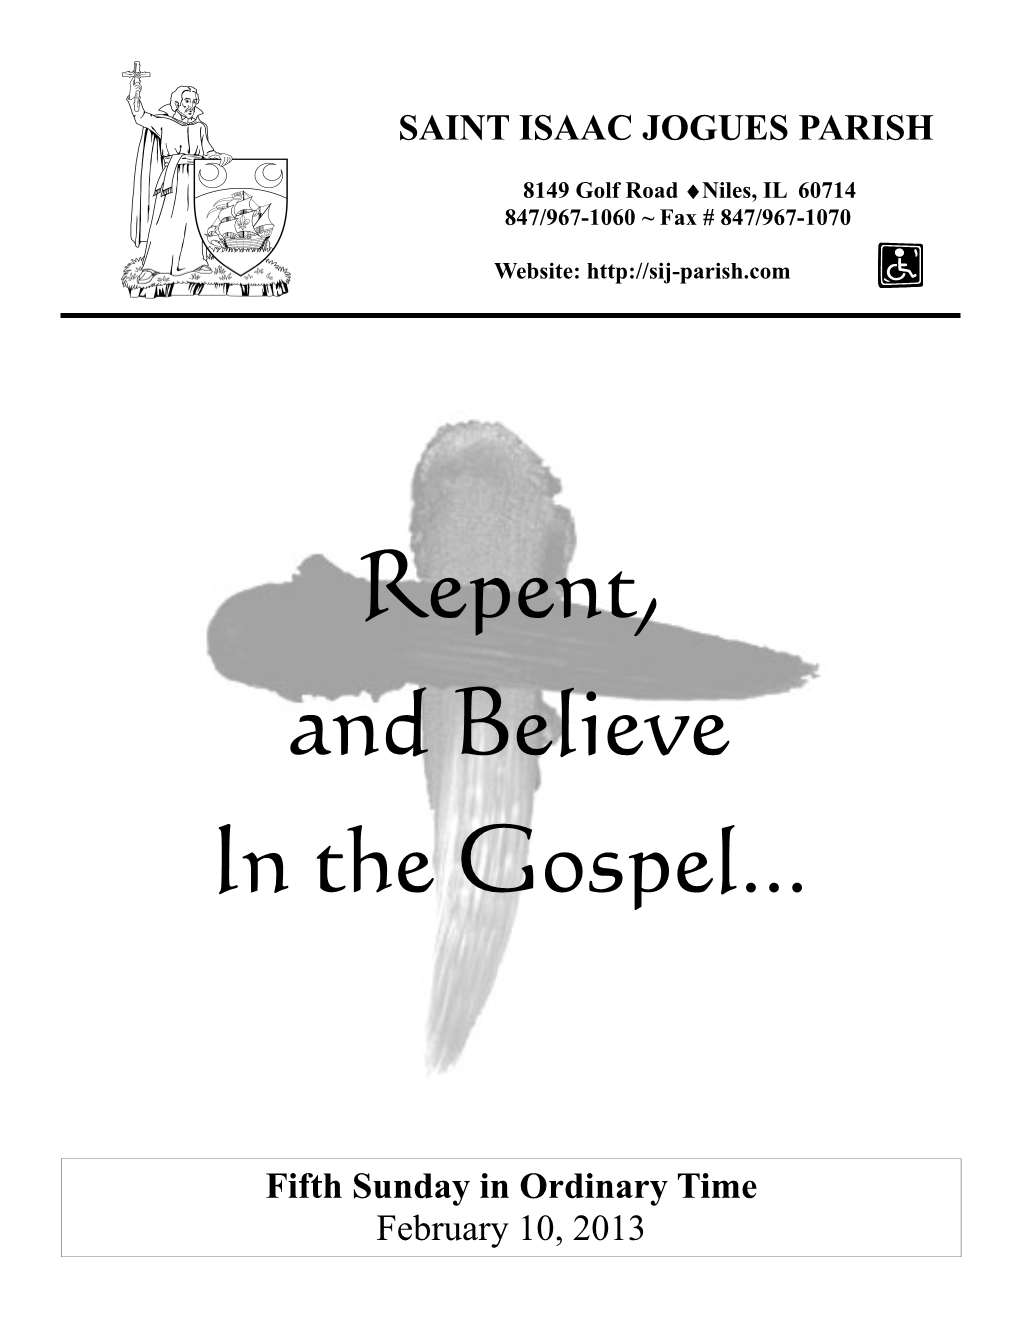 Repent, and Believe in the Gospel